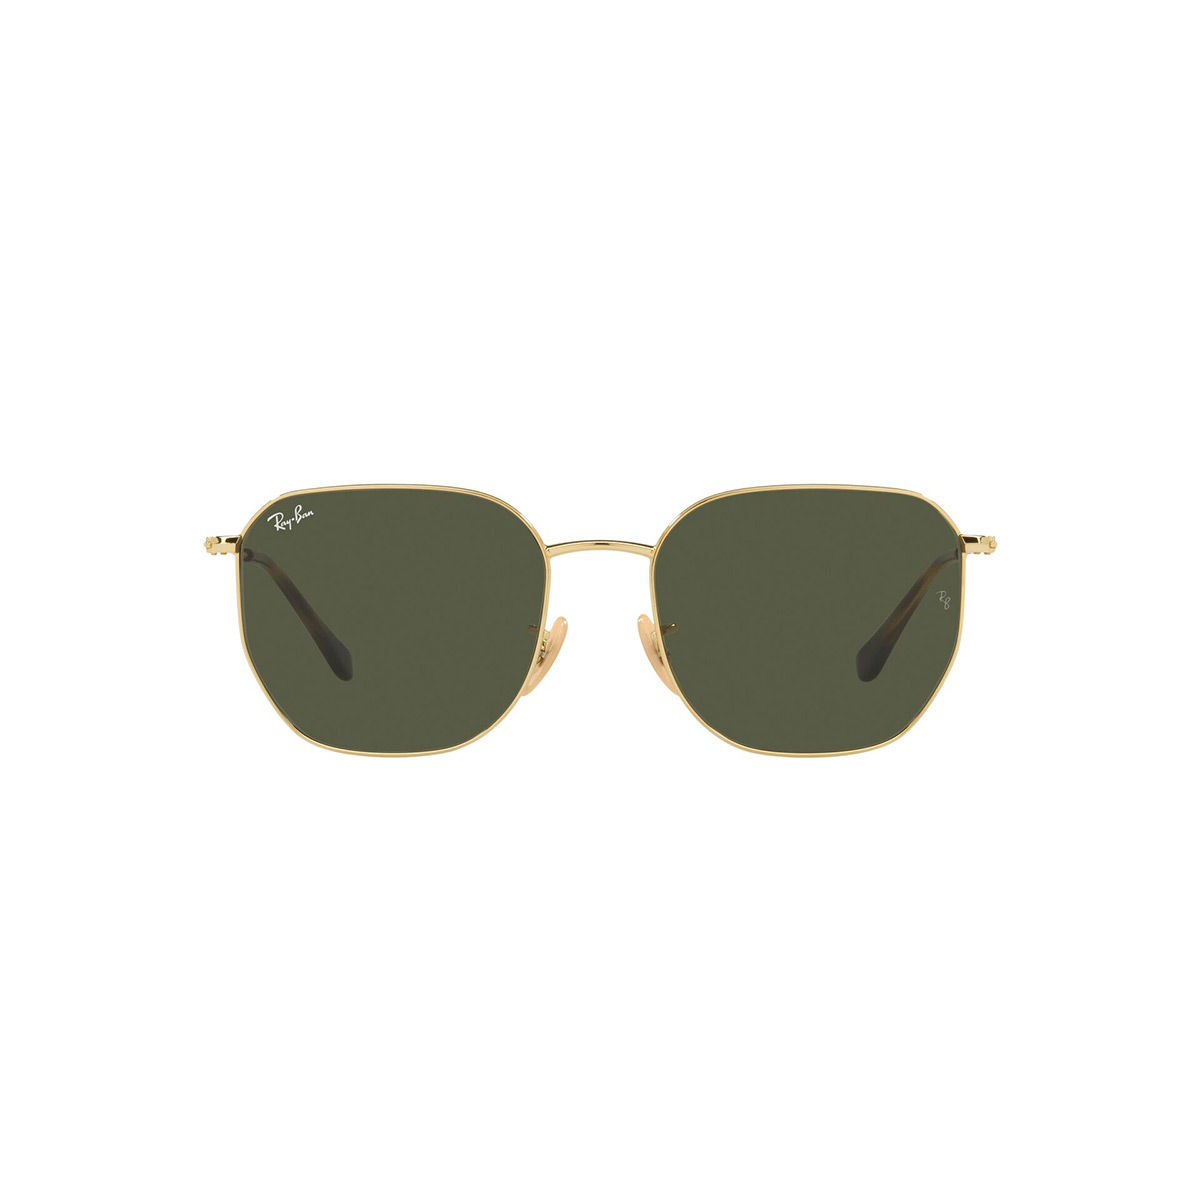 Ray-Ban Black On Gold Sunglasses | Glasses.com® | Free Shipping